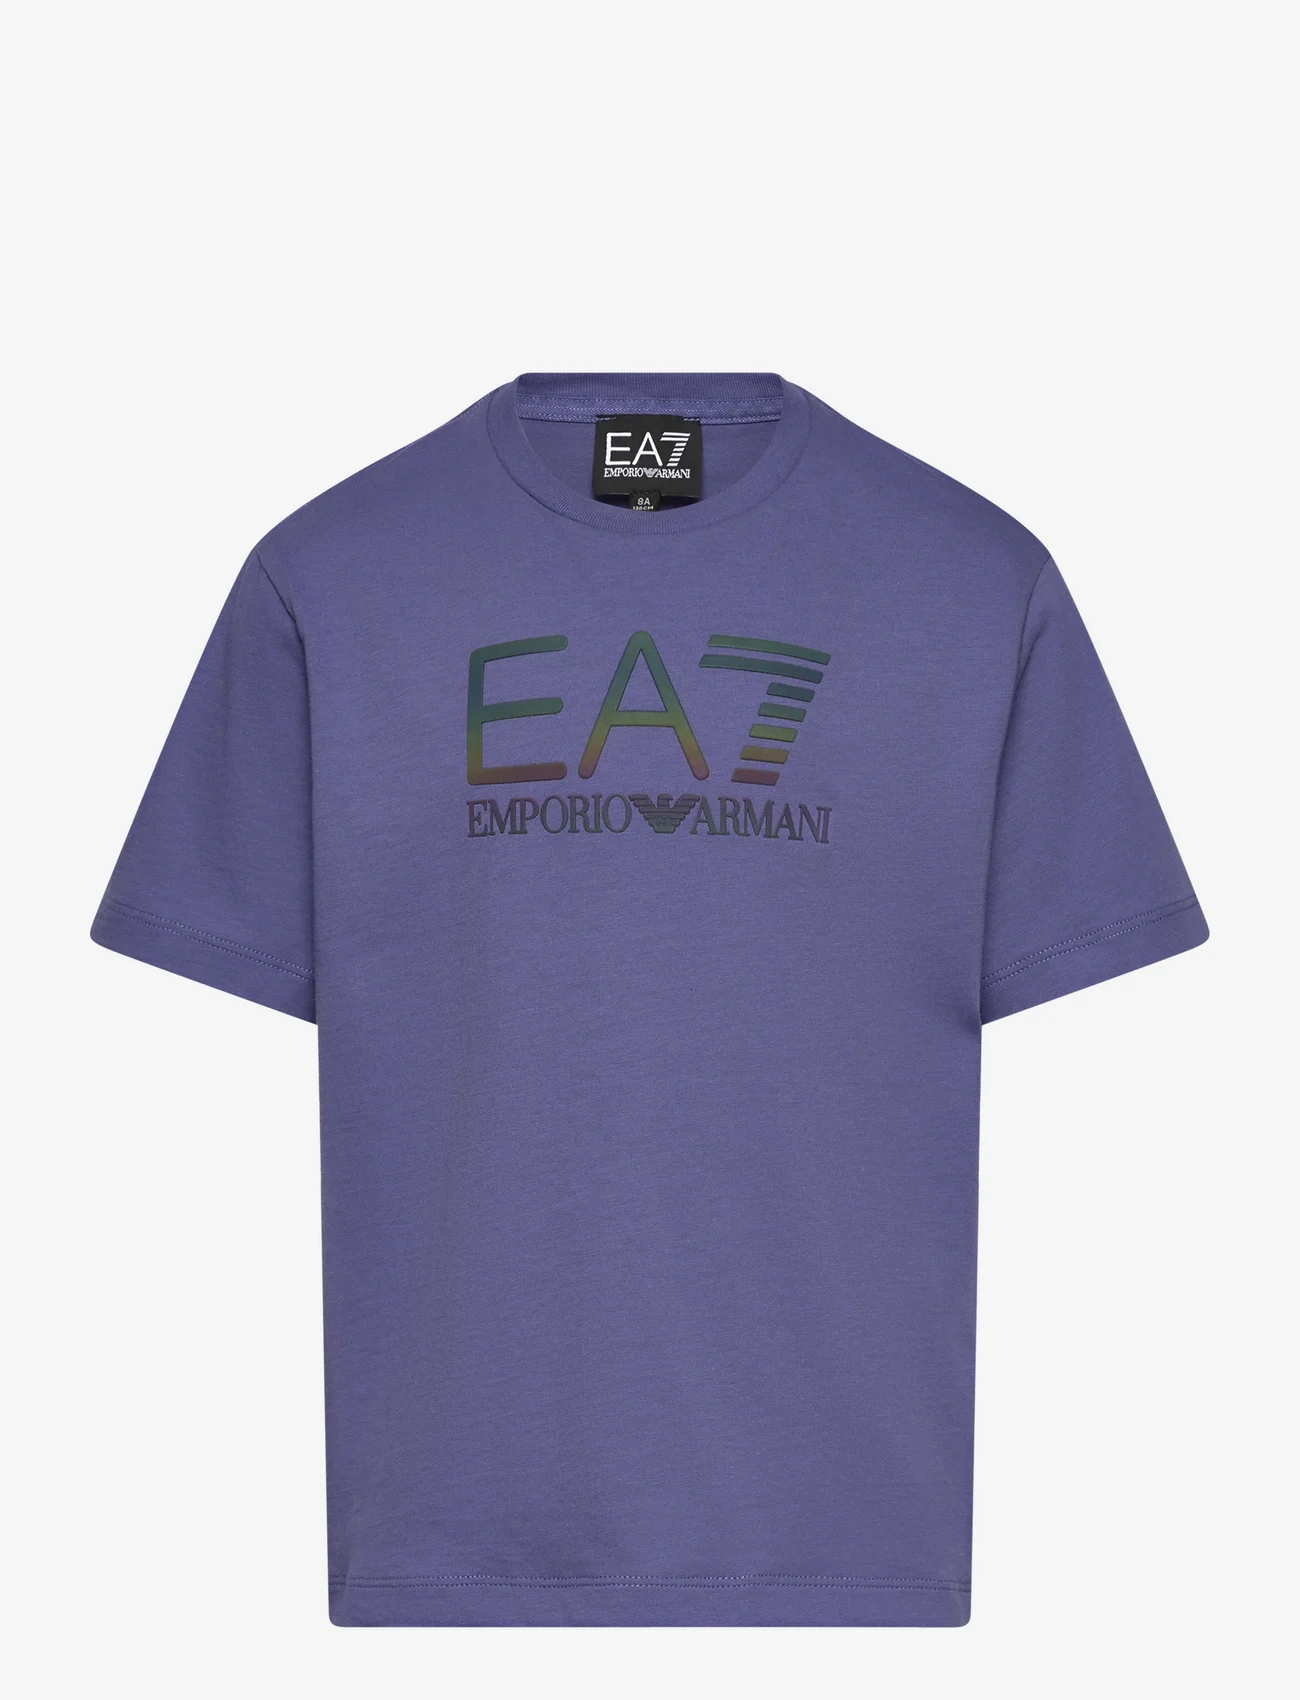 EA7 - T-SHIRT - marškinėliai trumpomis rankovėmis - 1557-marlin - 0